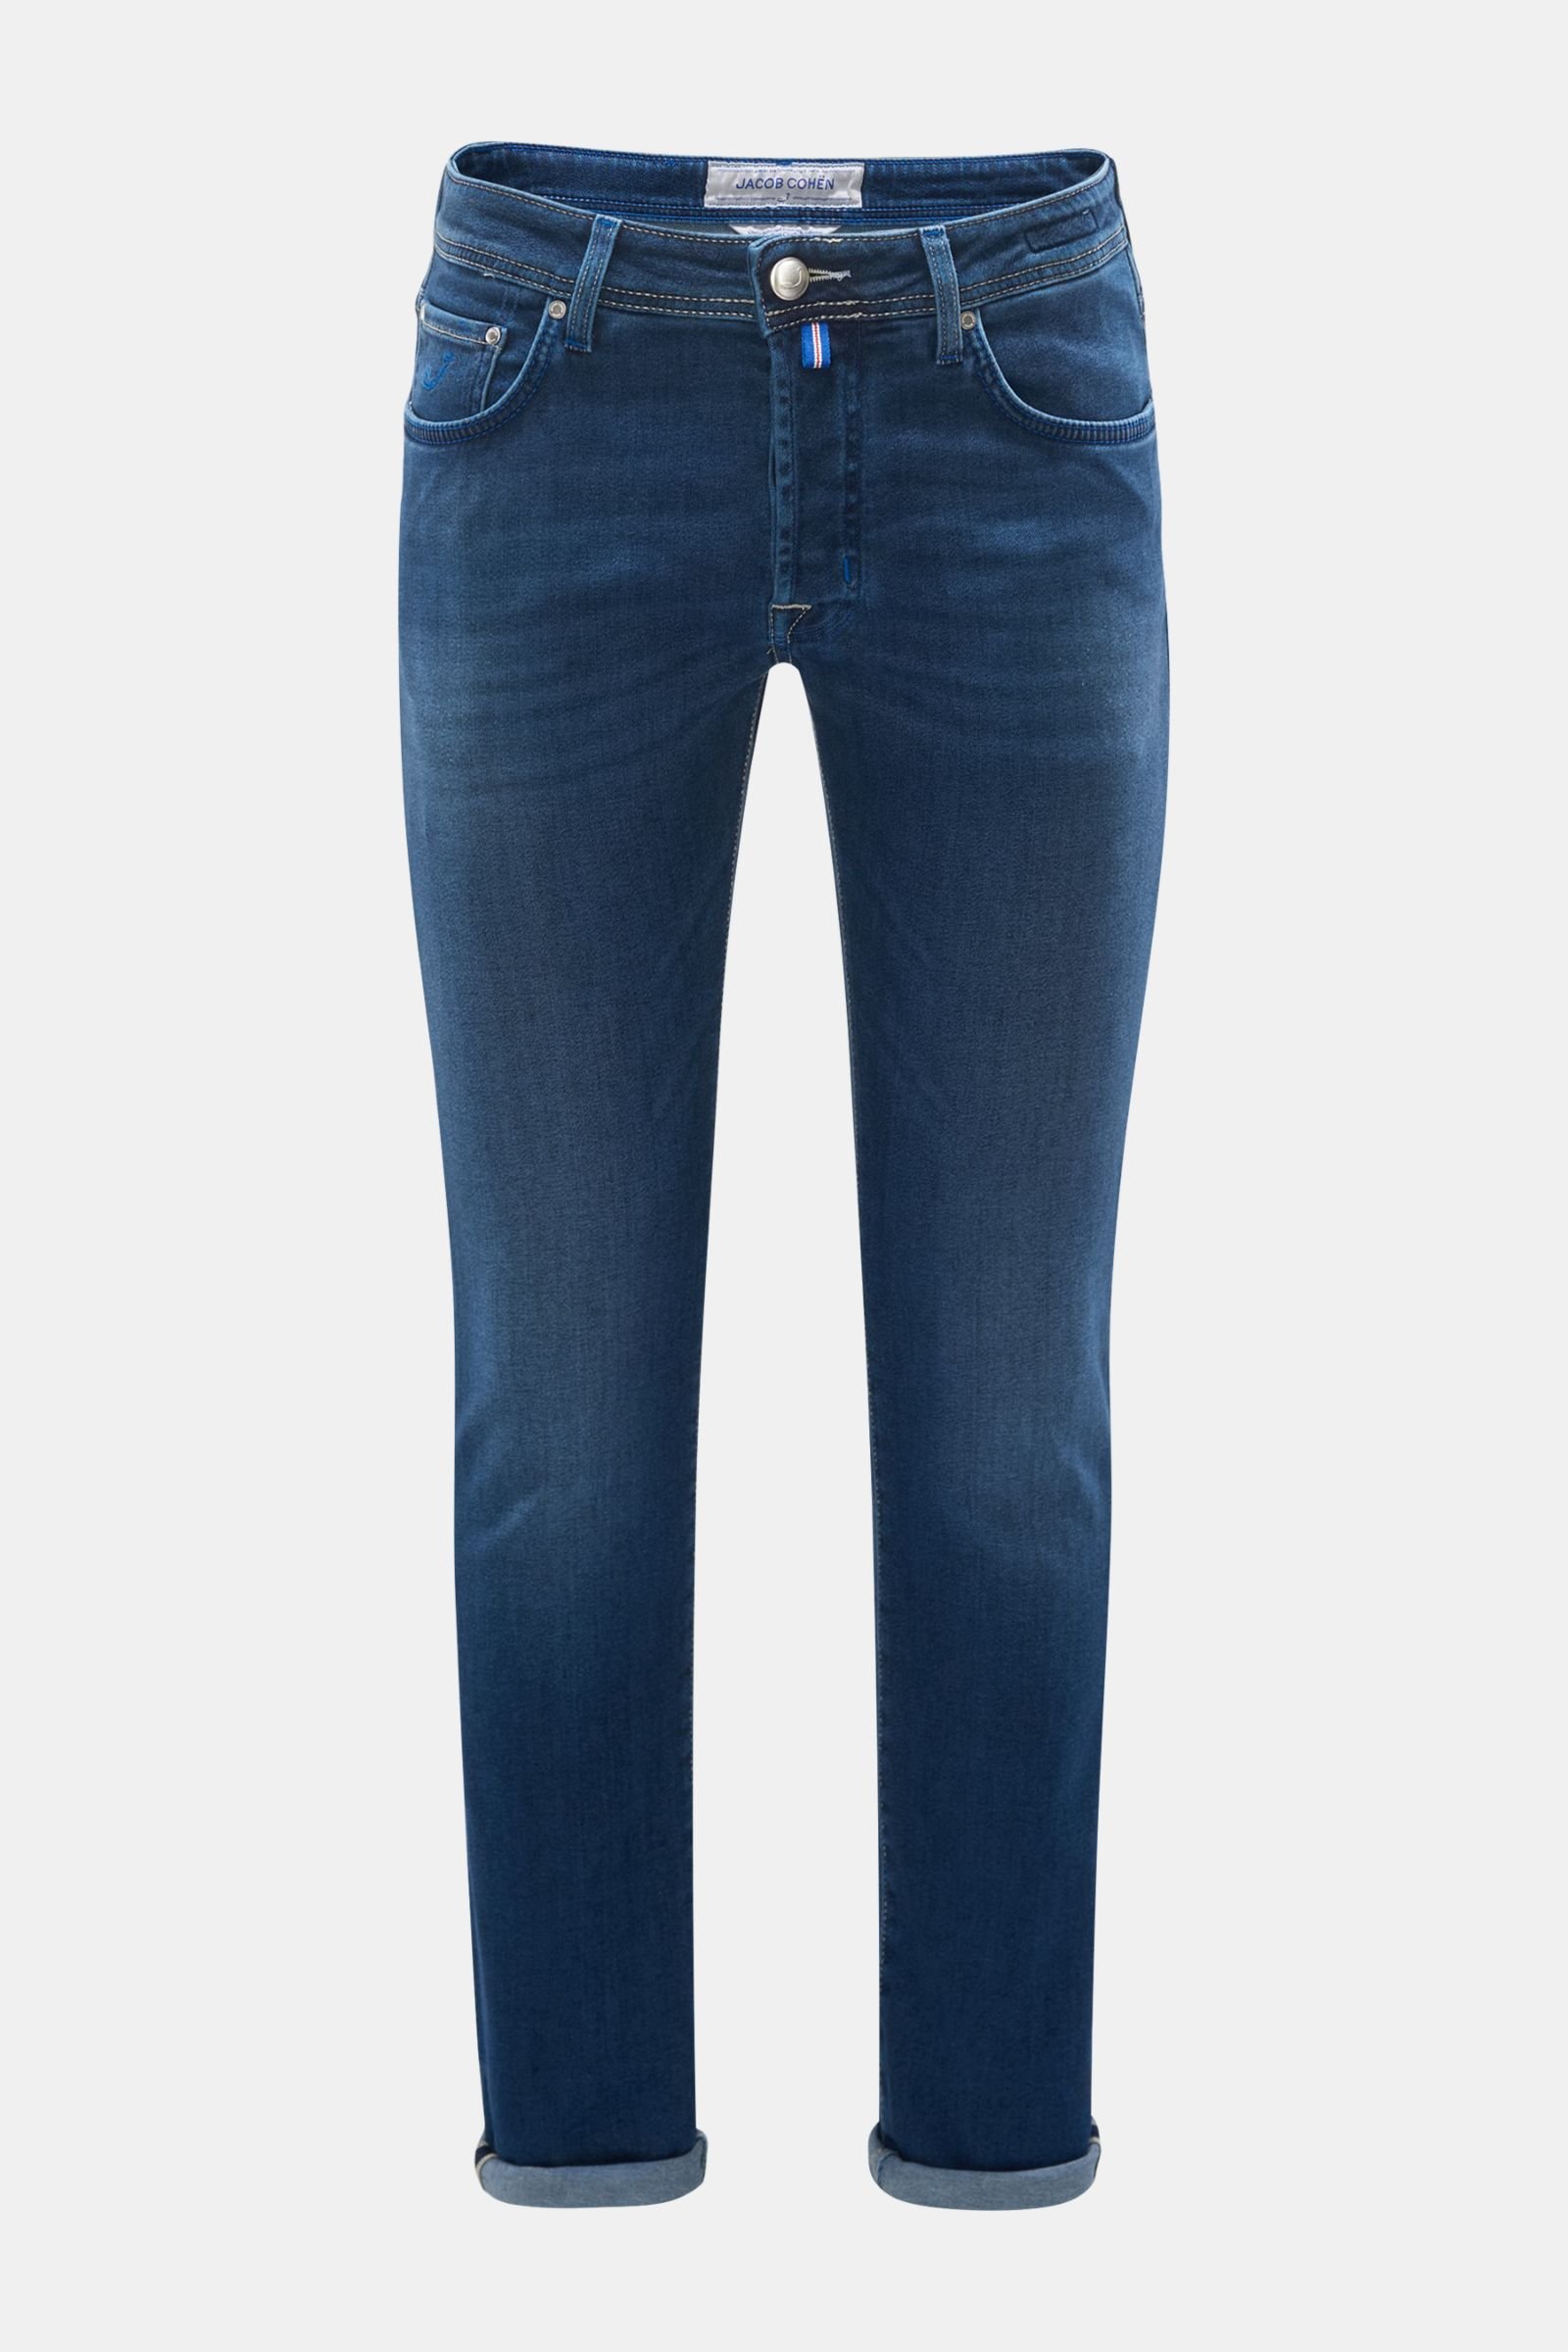 Jeans 'J688 Comfort Slim Fit' navy